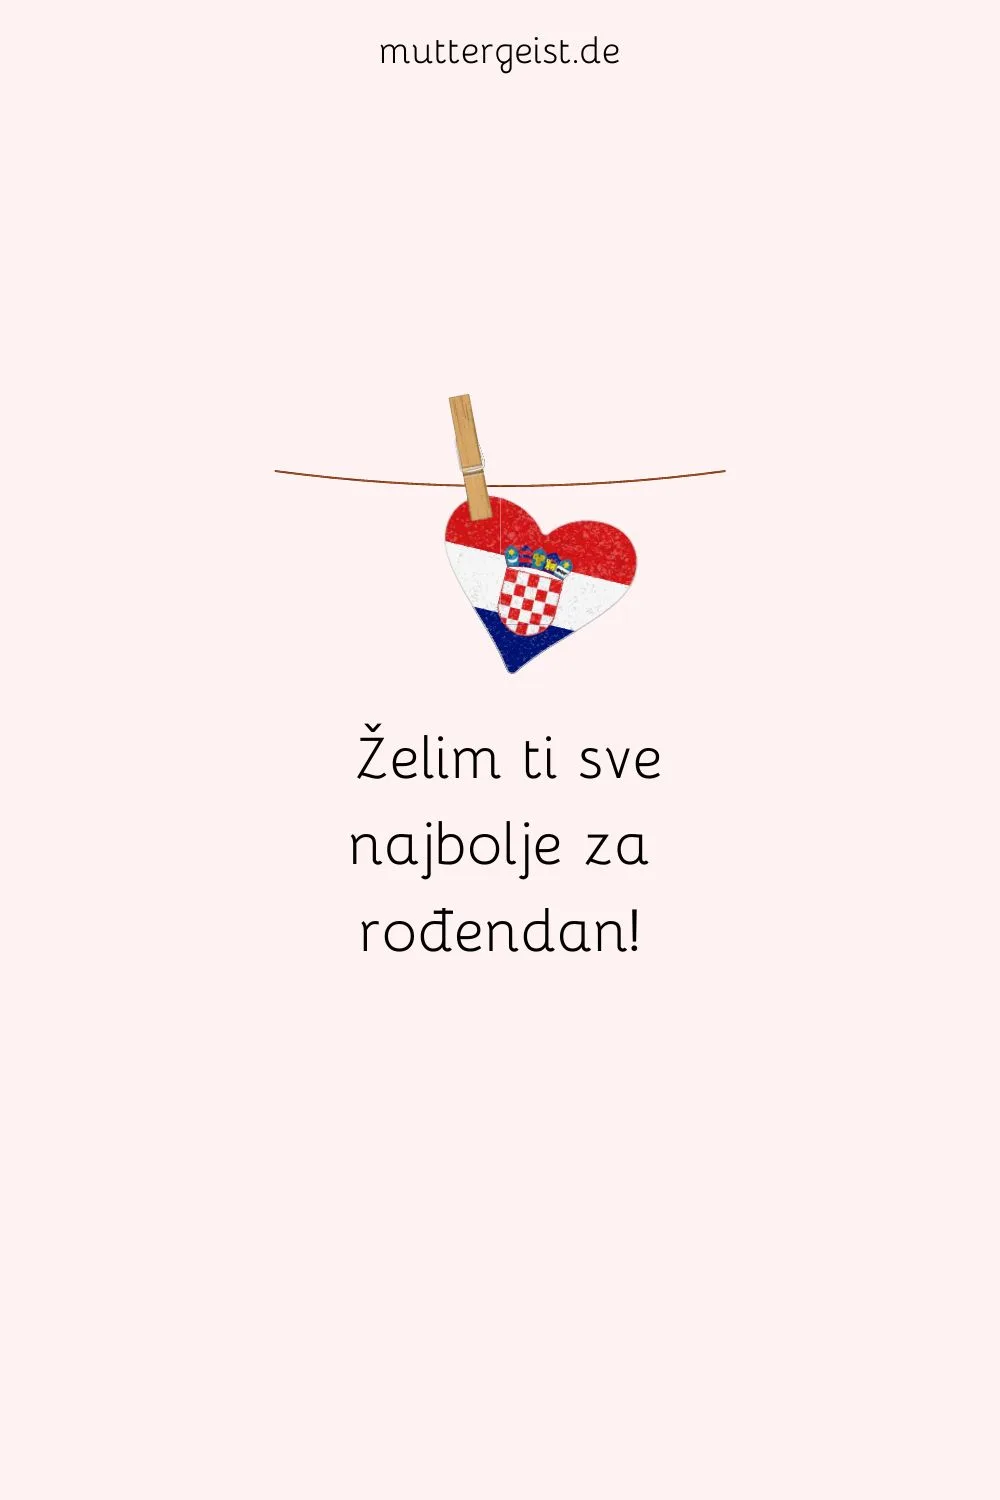 Kroatischer geburtstagsgruß